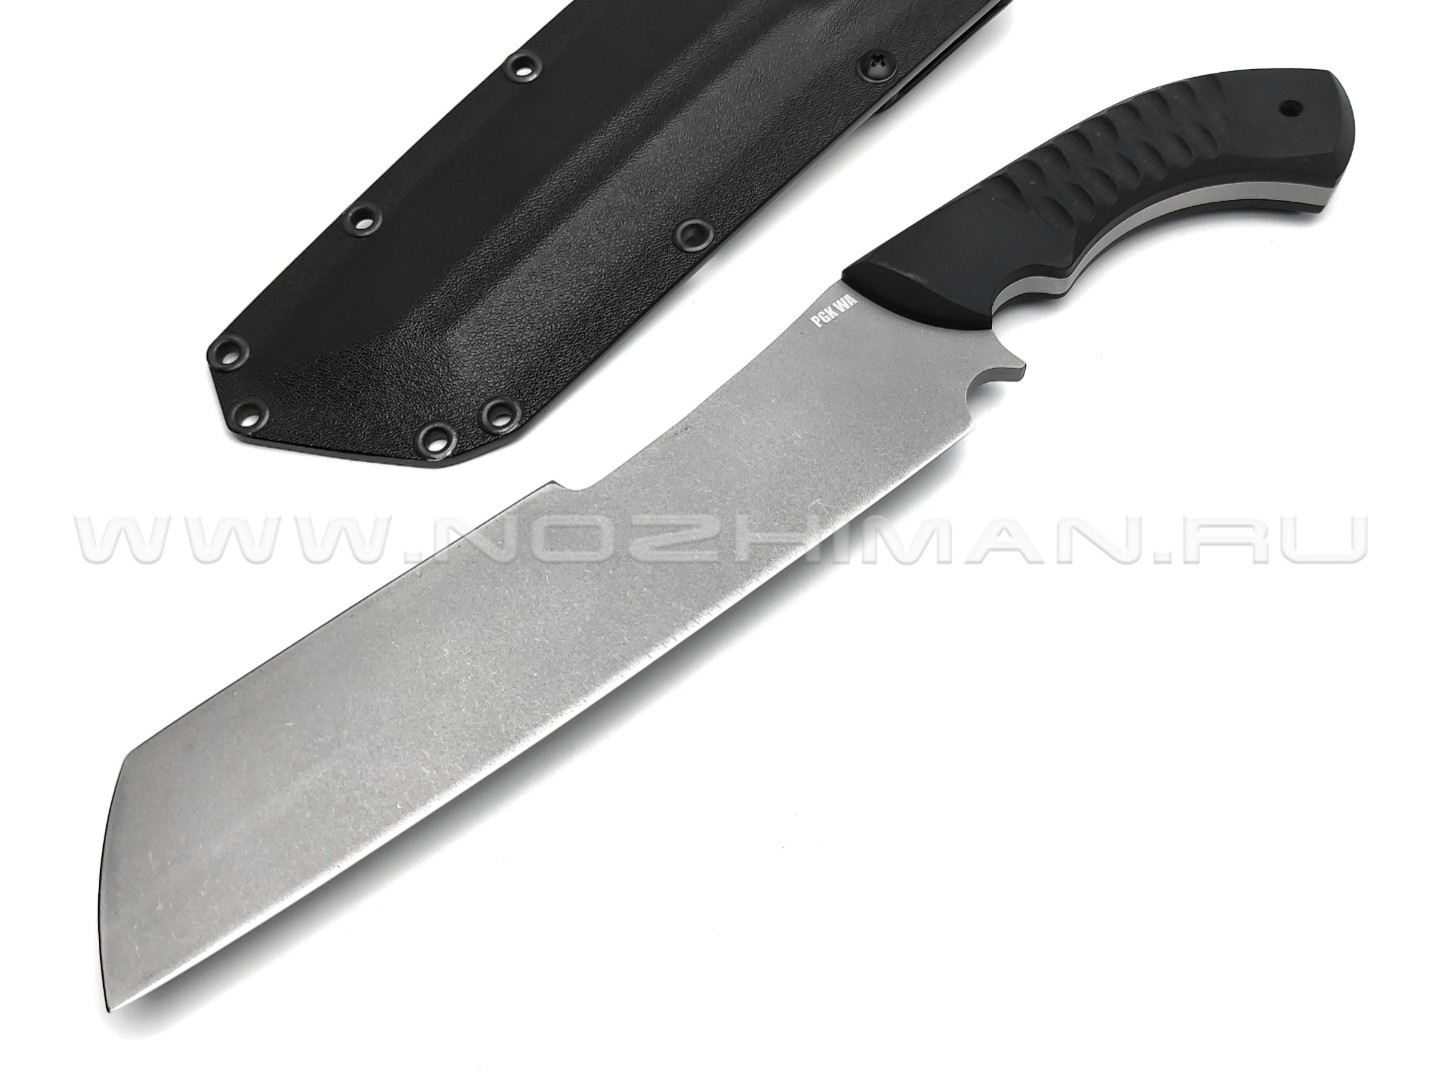 Волчий Век нож Карачун Brutal Edition сталь PGK WA stonewash, рукоять G10 black